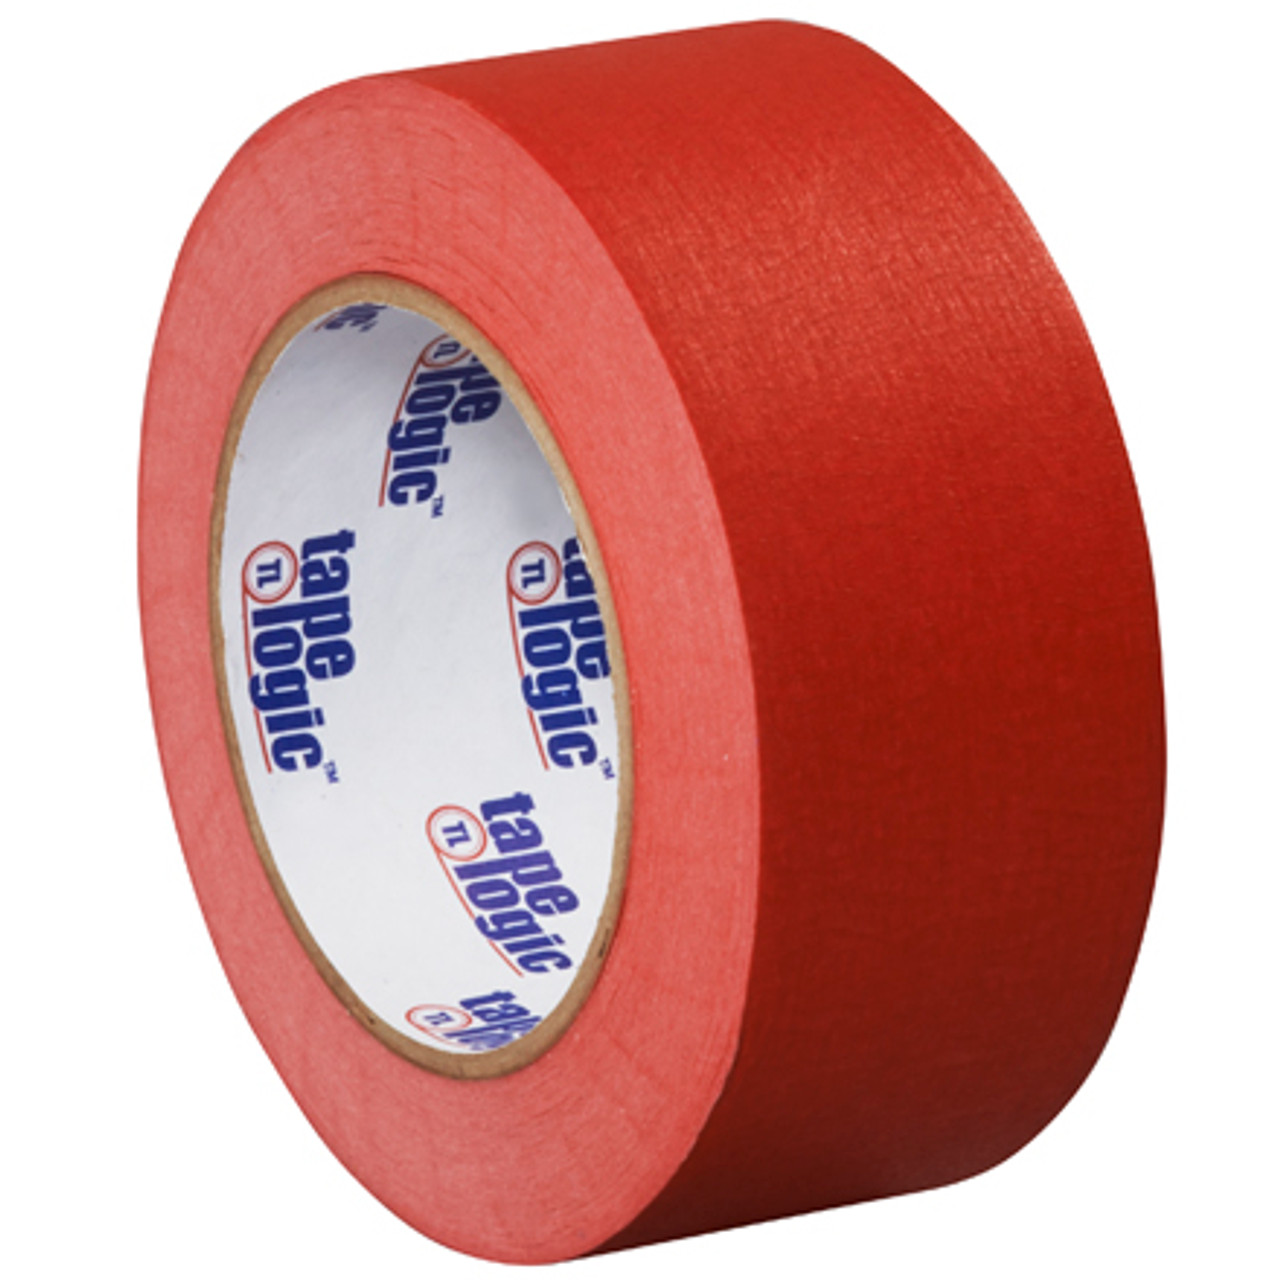 2 x 60 yds Red (12 Pack) Tape Logic™ Masking Tape